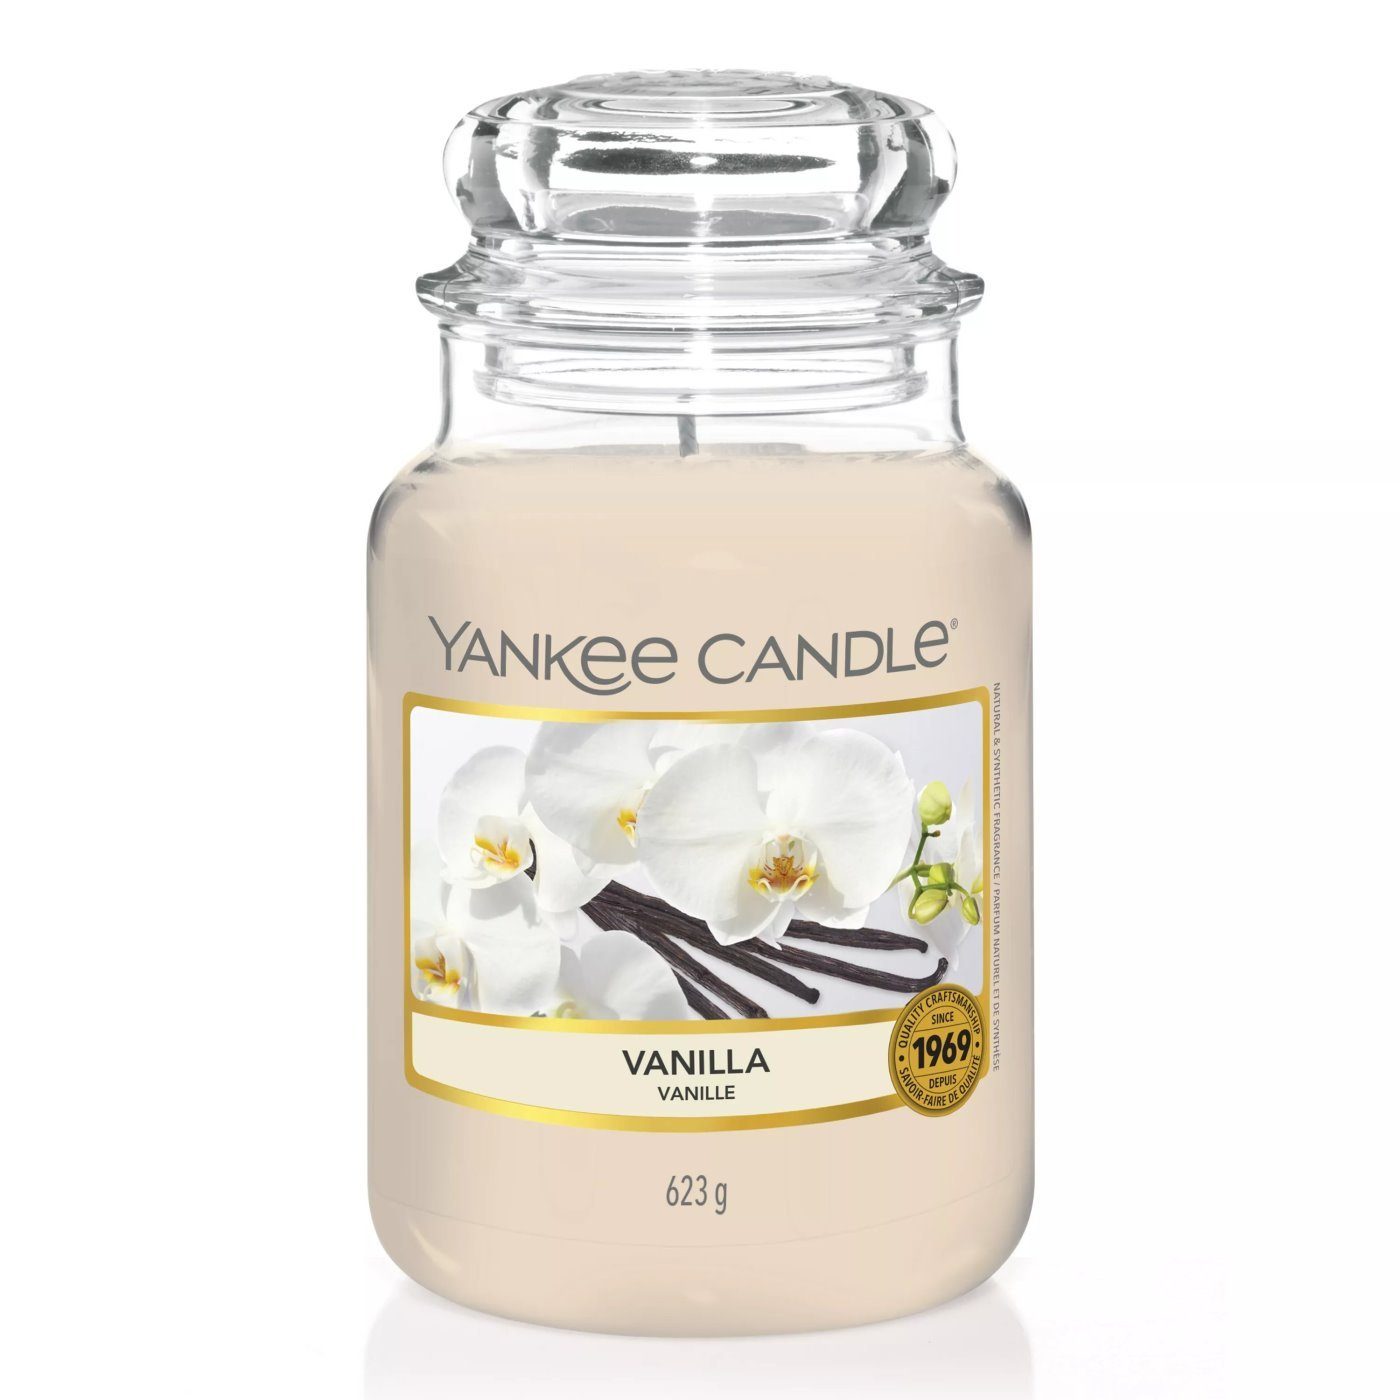 Yankee Candle Duftkerze Vanilla 623g - Duftkerze im Glas - 1 Stück